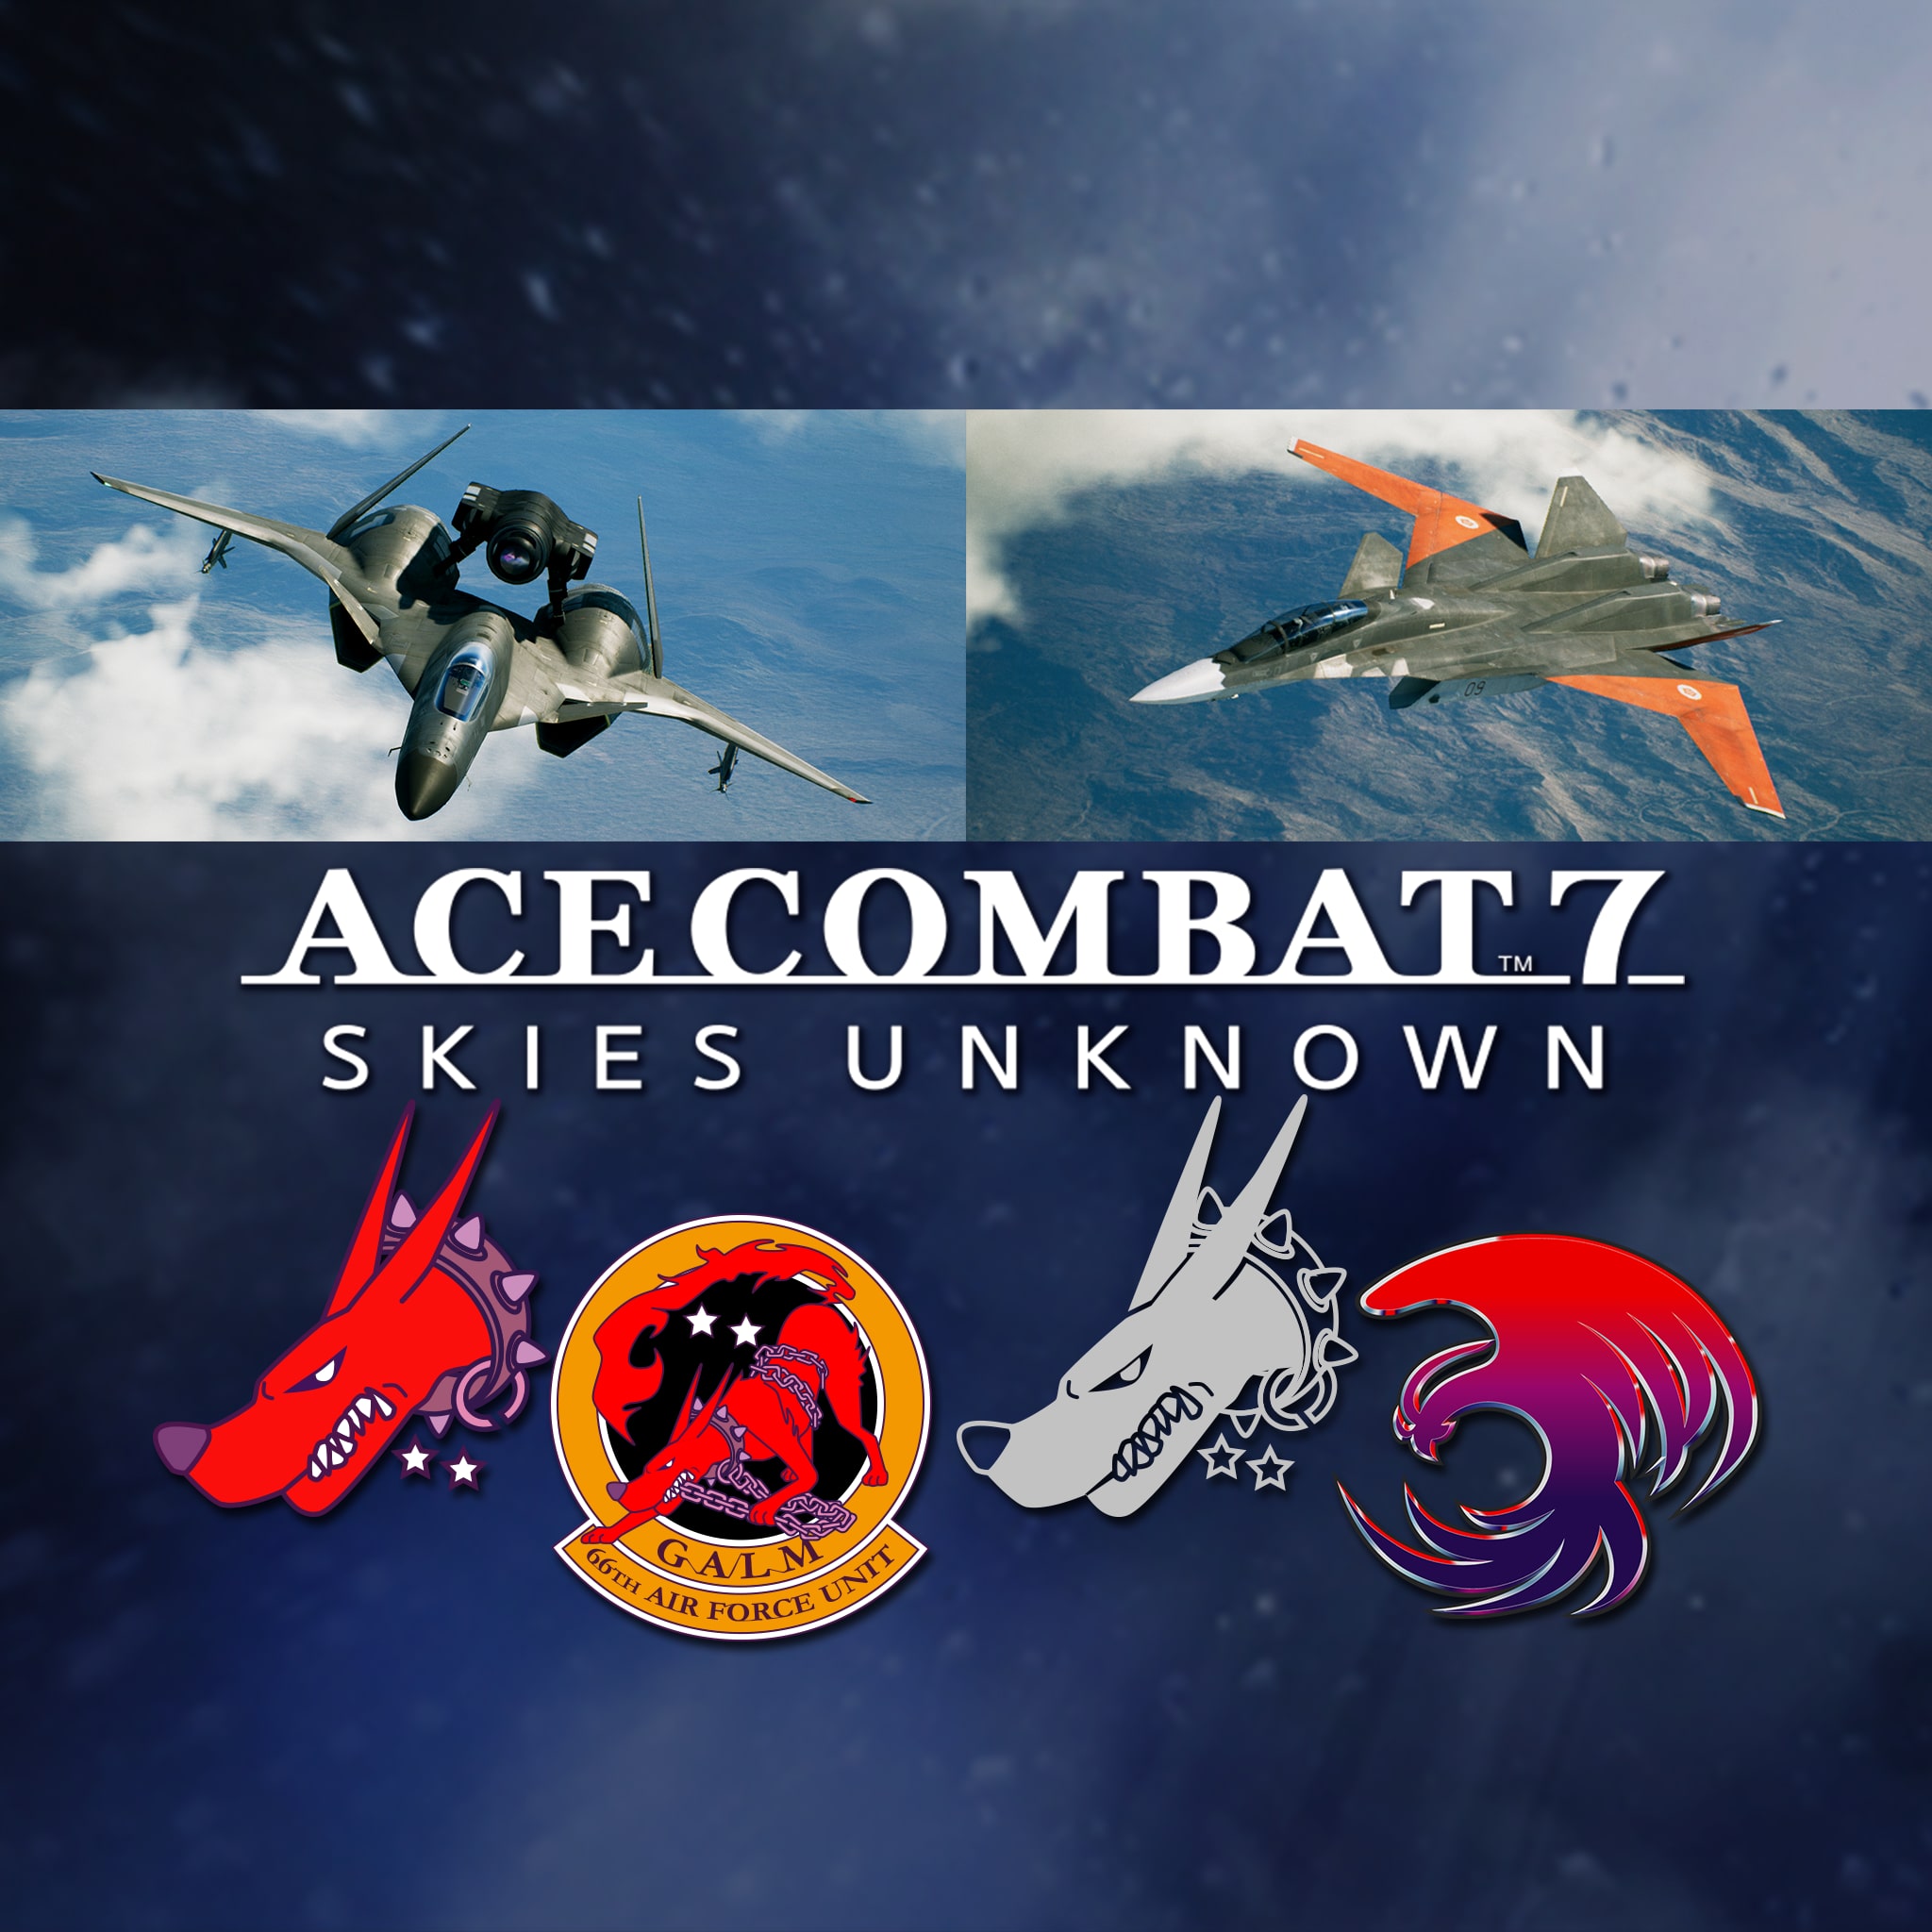 ACE COMBAT™ 7: SKIES UNKNOWN - ADFX-01 Morgan Set